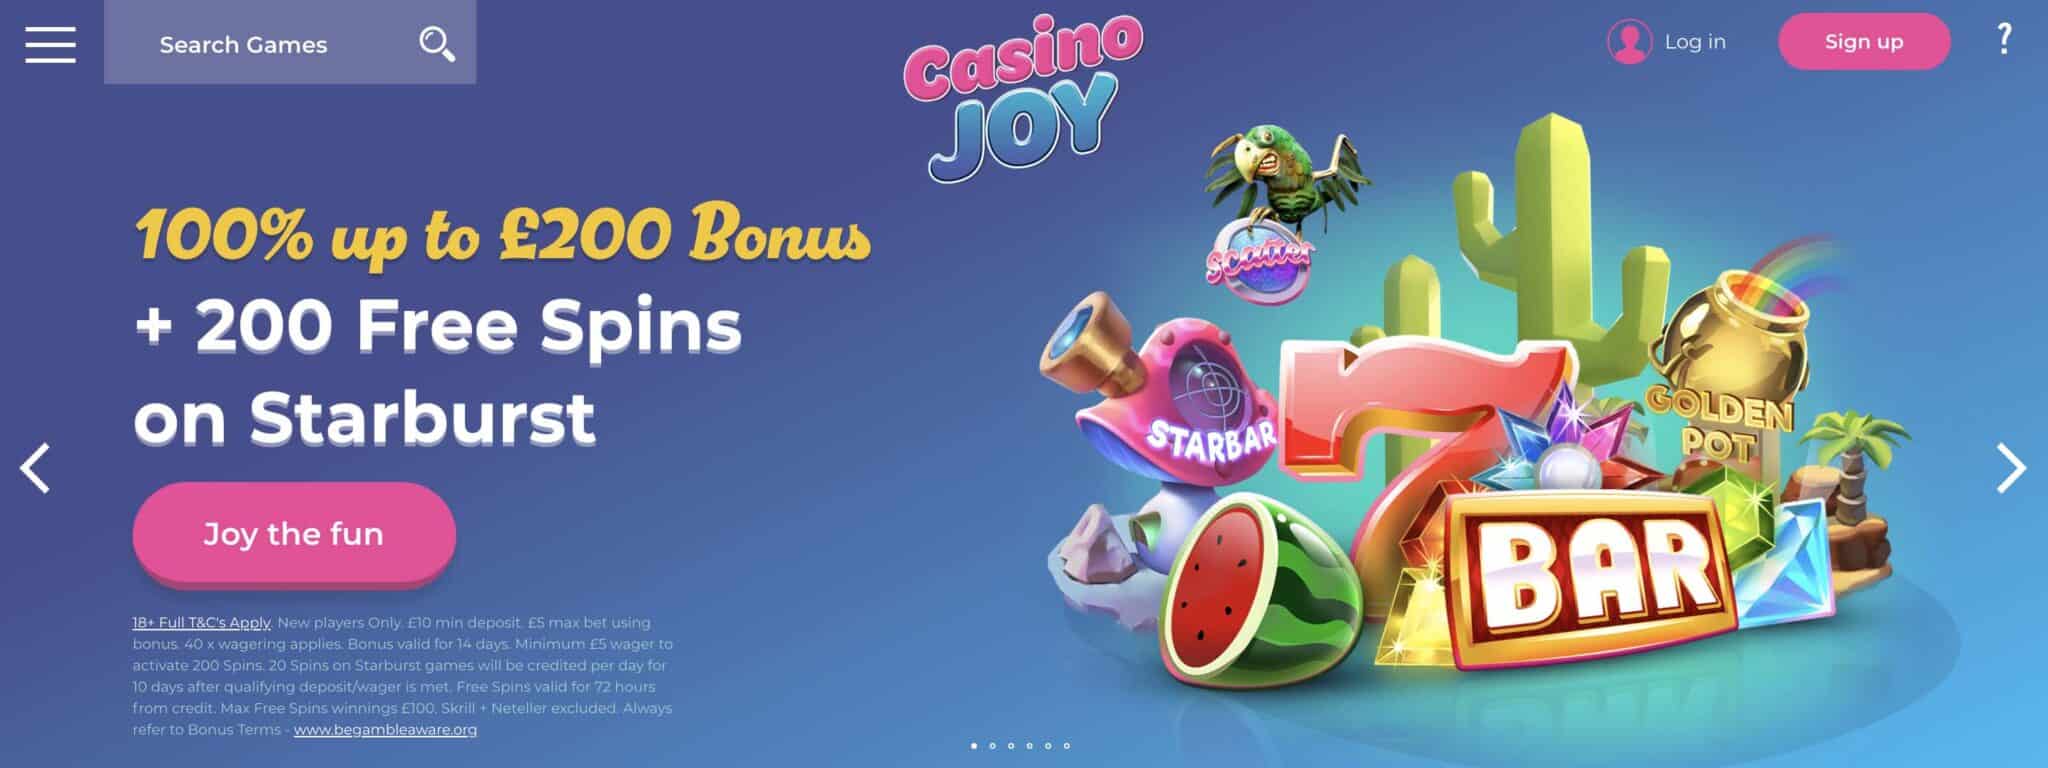 casino joy forum